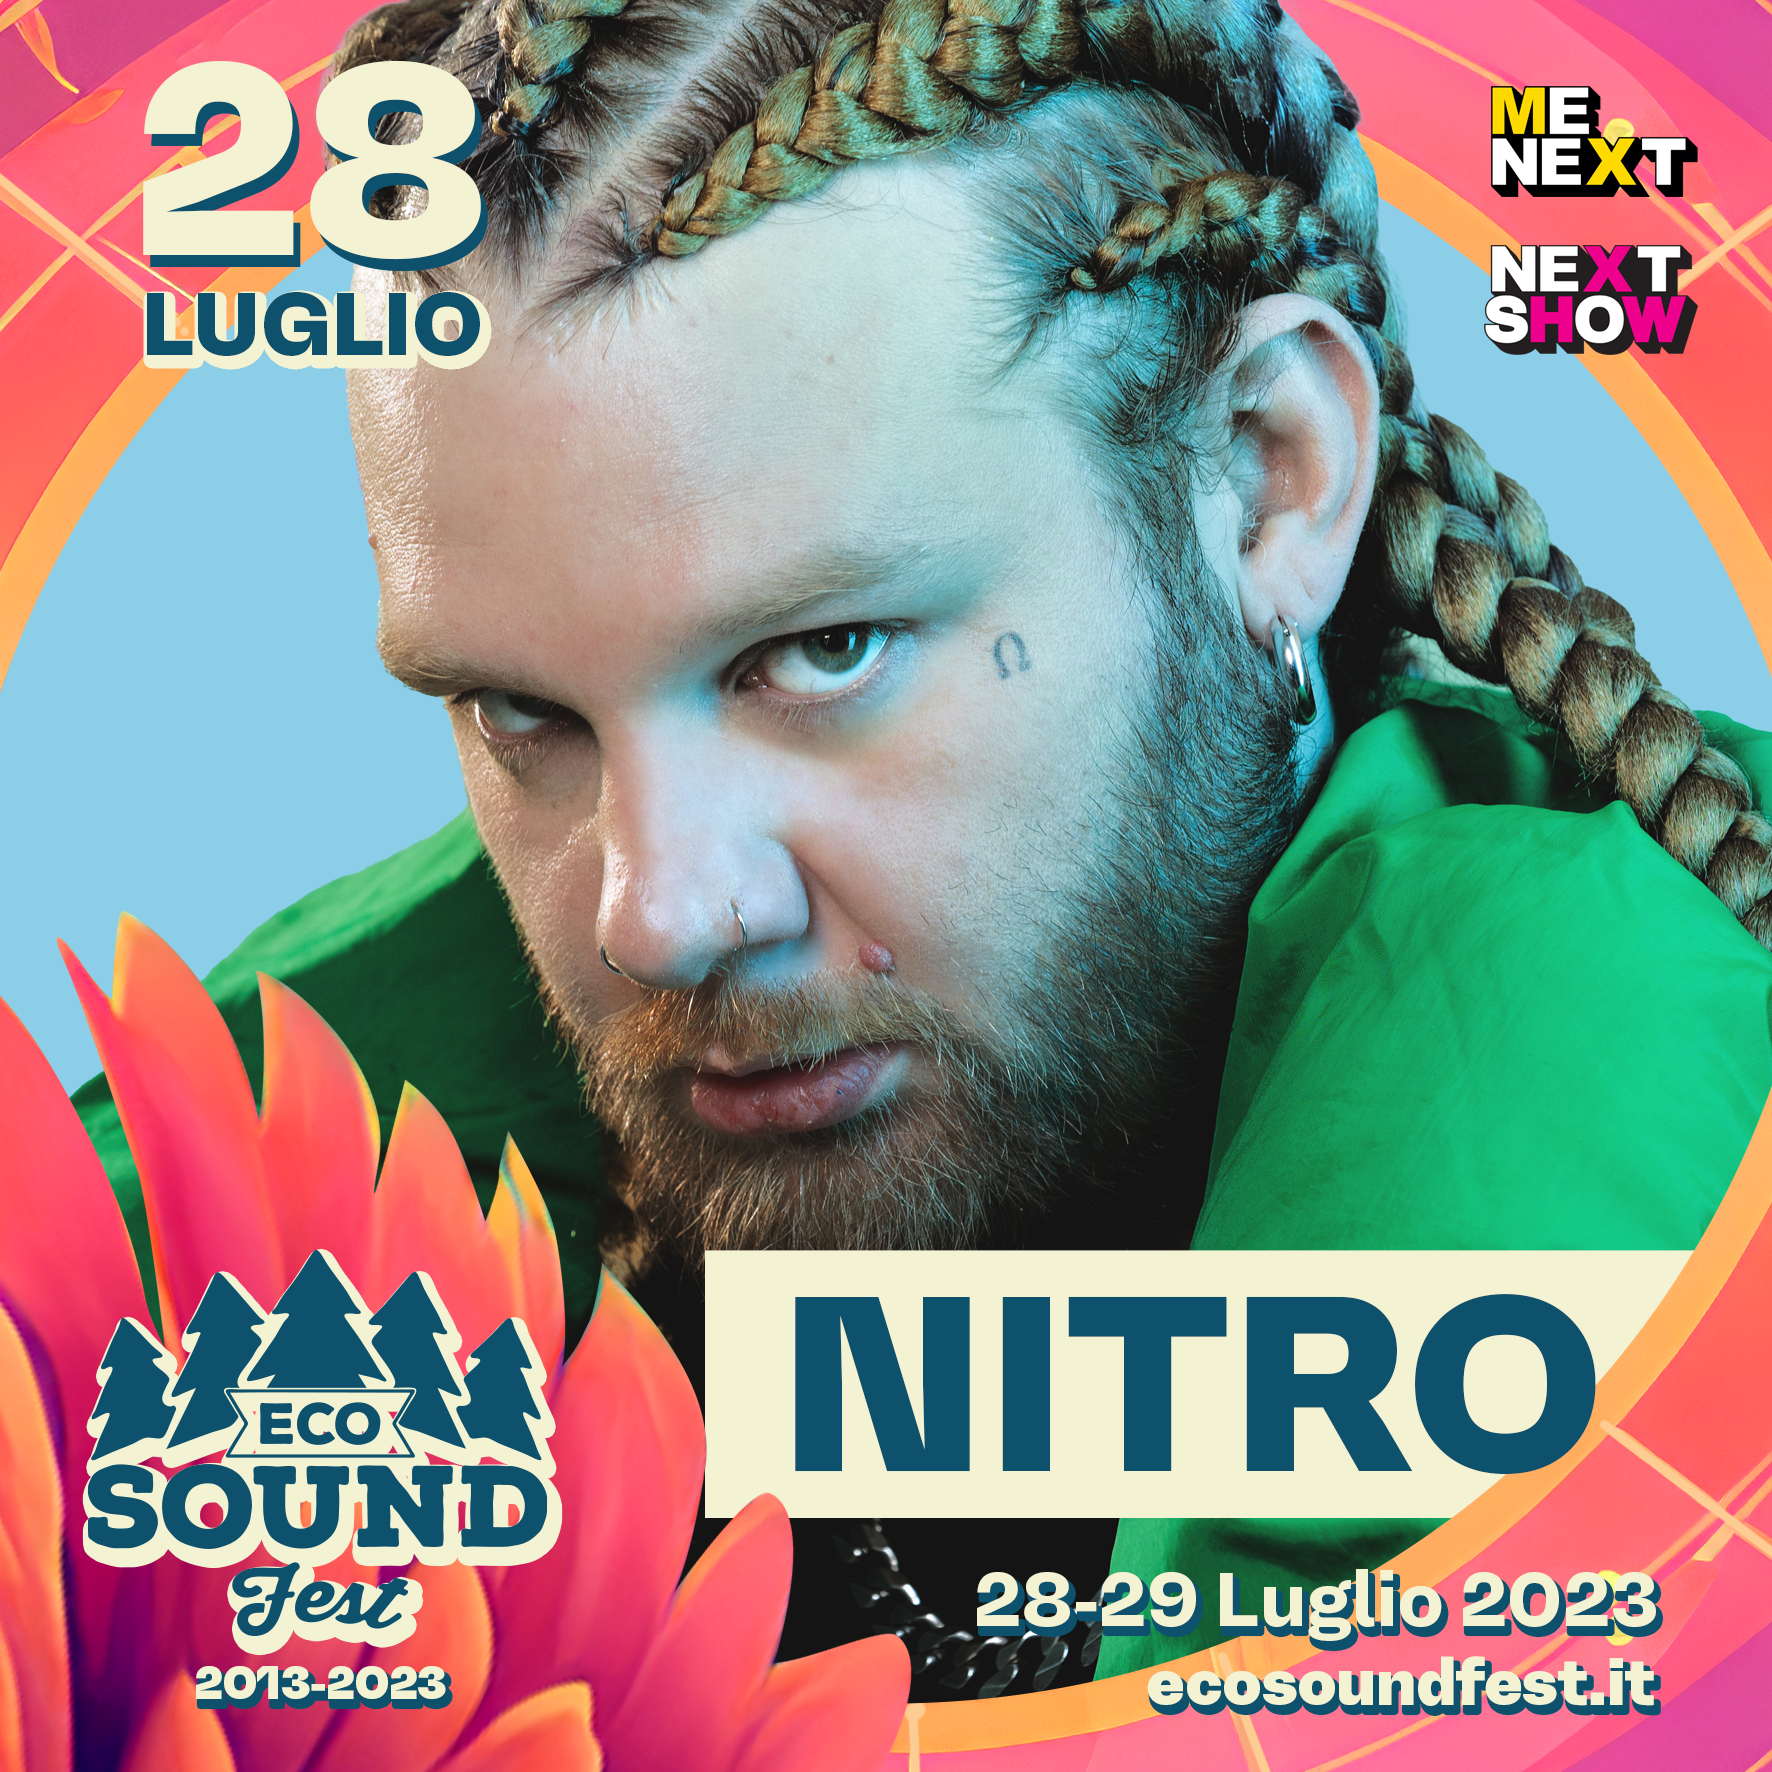 Nitro, all'Eco Sound Fest 2023